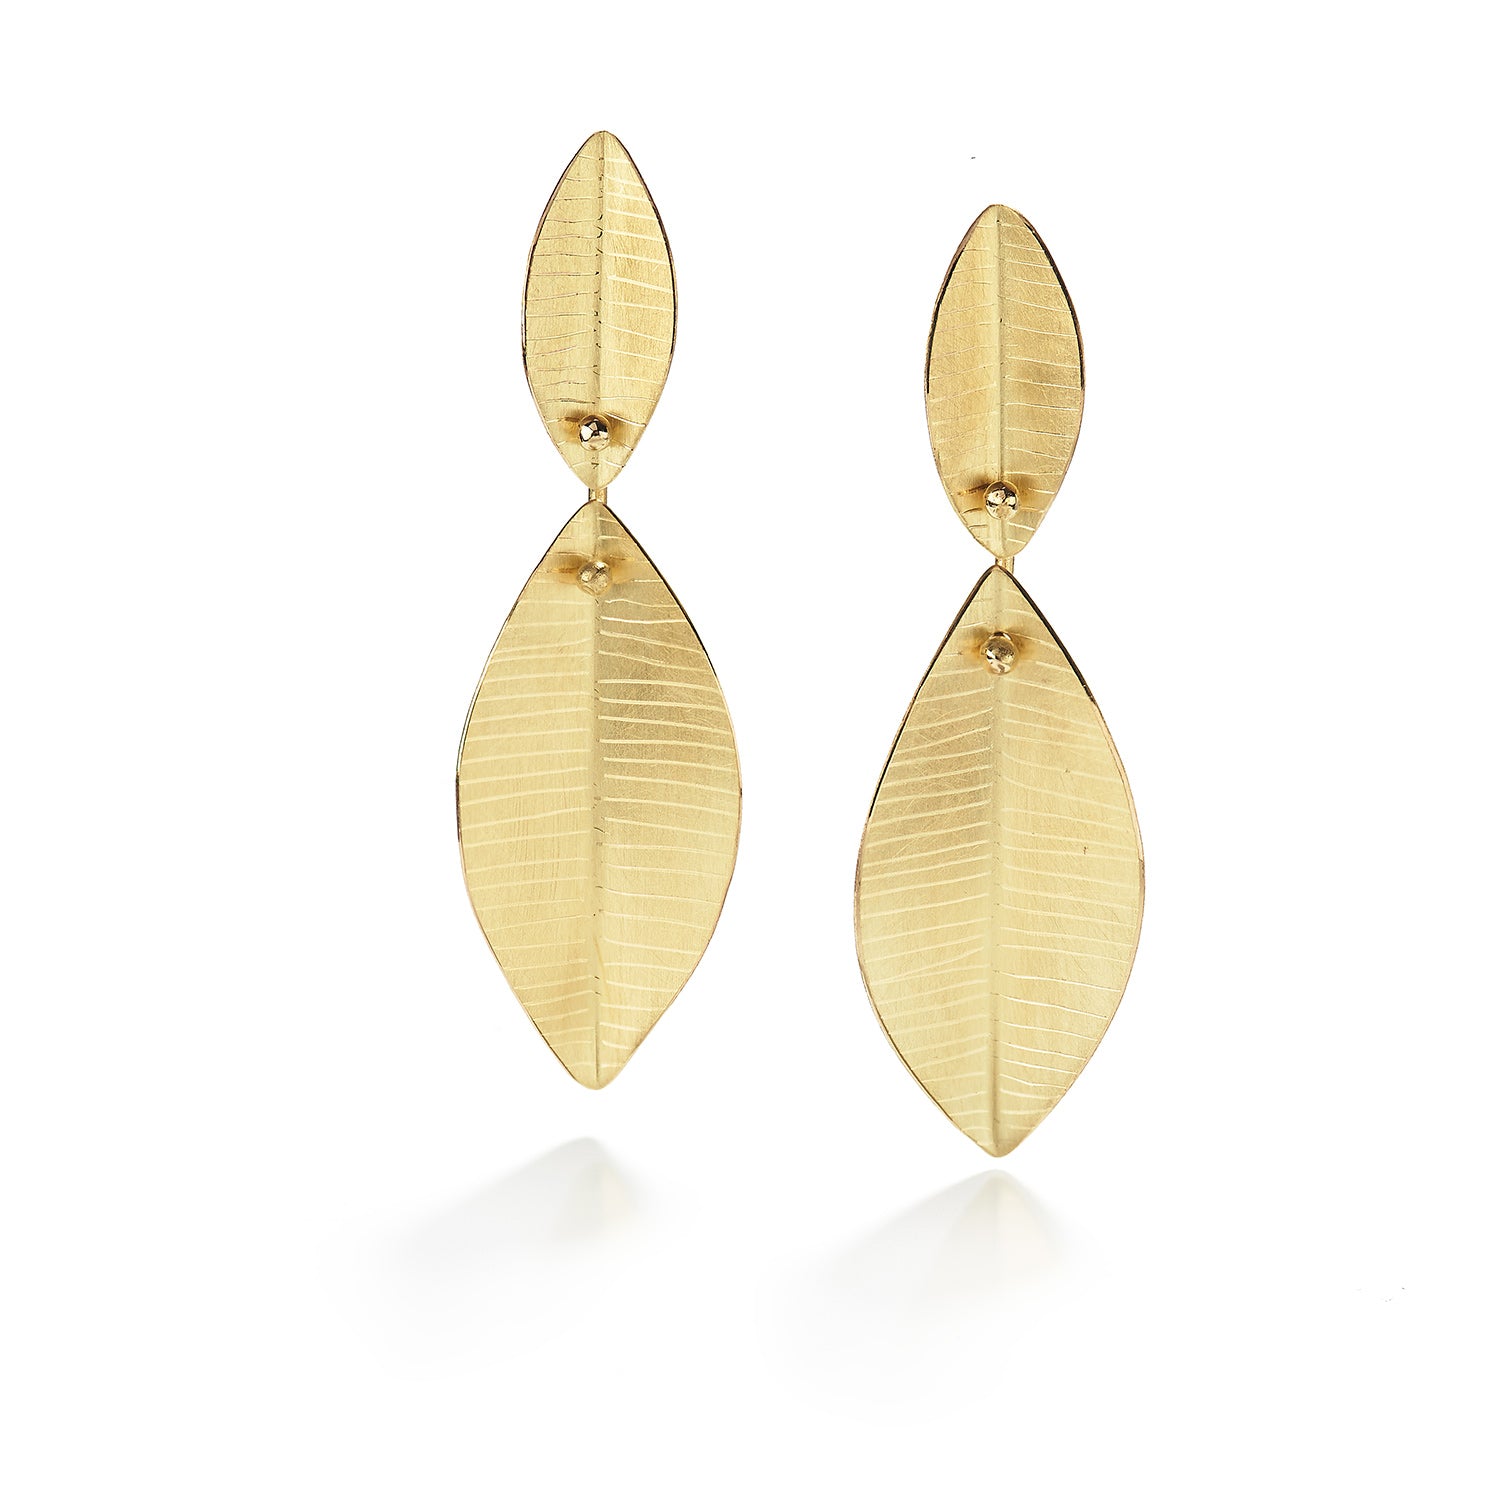 Baladre Gold Earrings